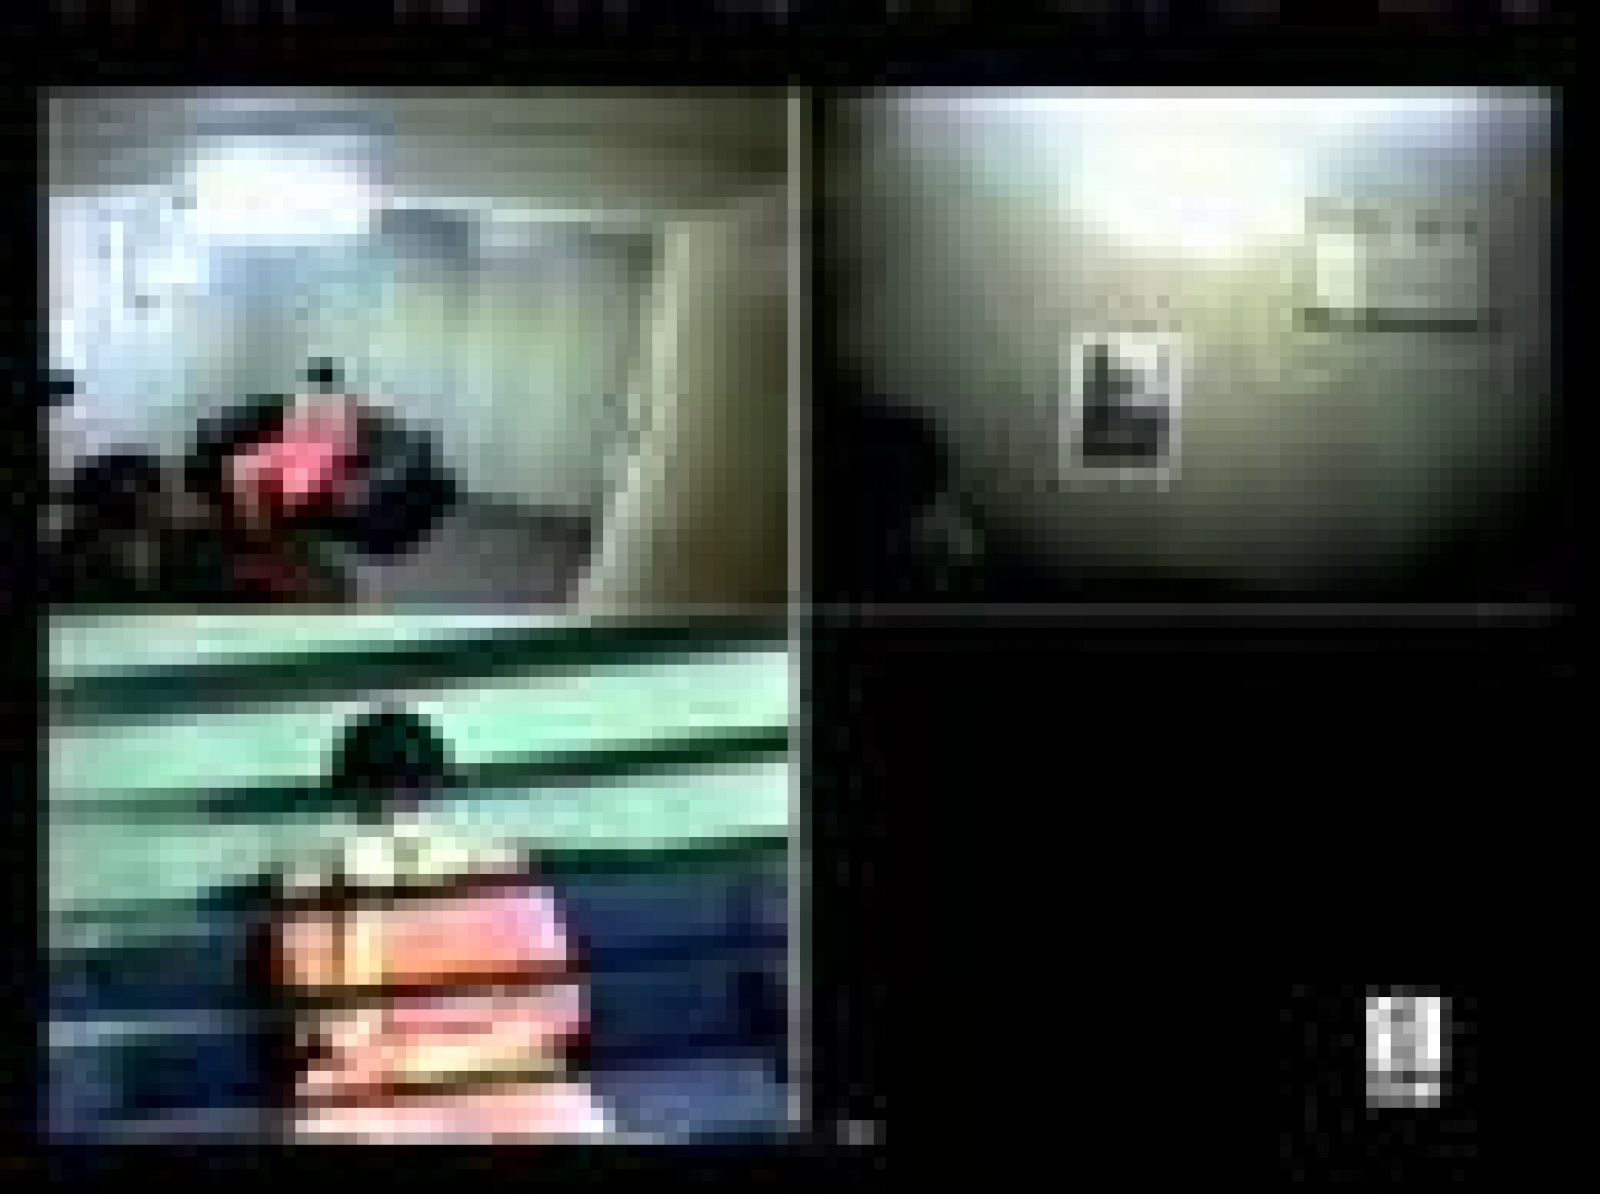 Sin programa: Así interrogan en Guantánamo | RTVE Play